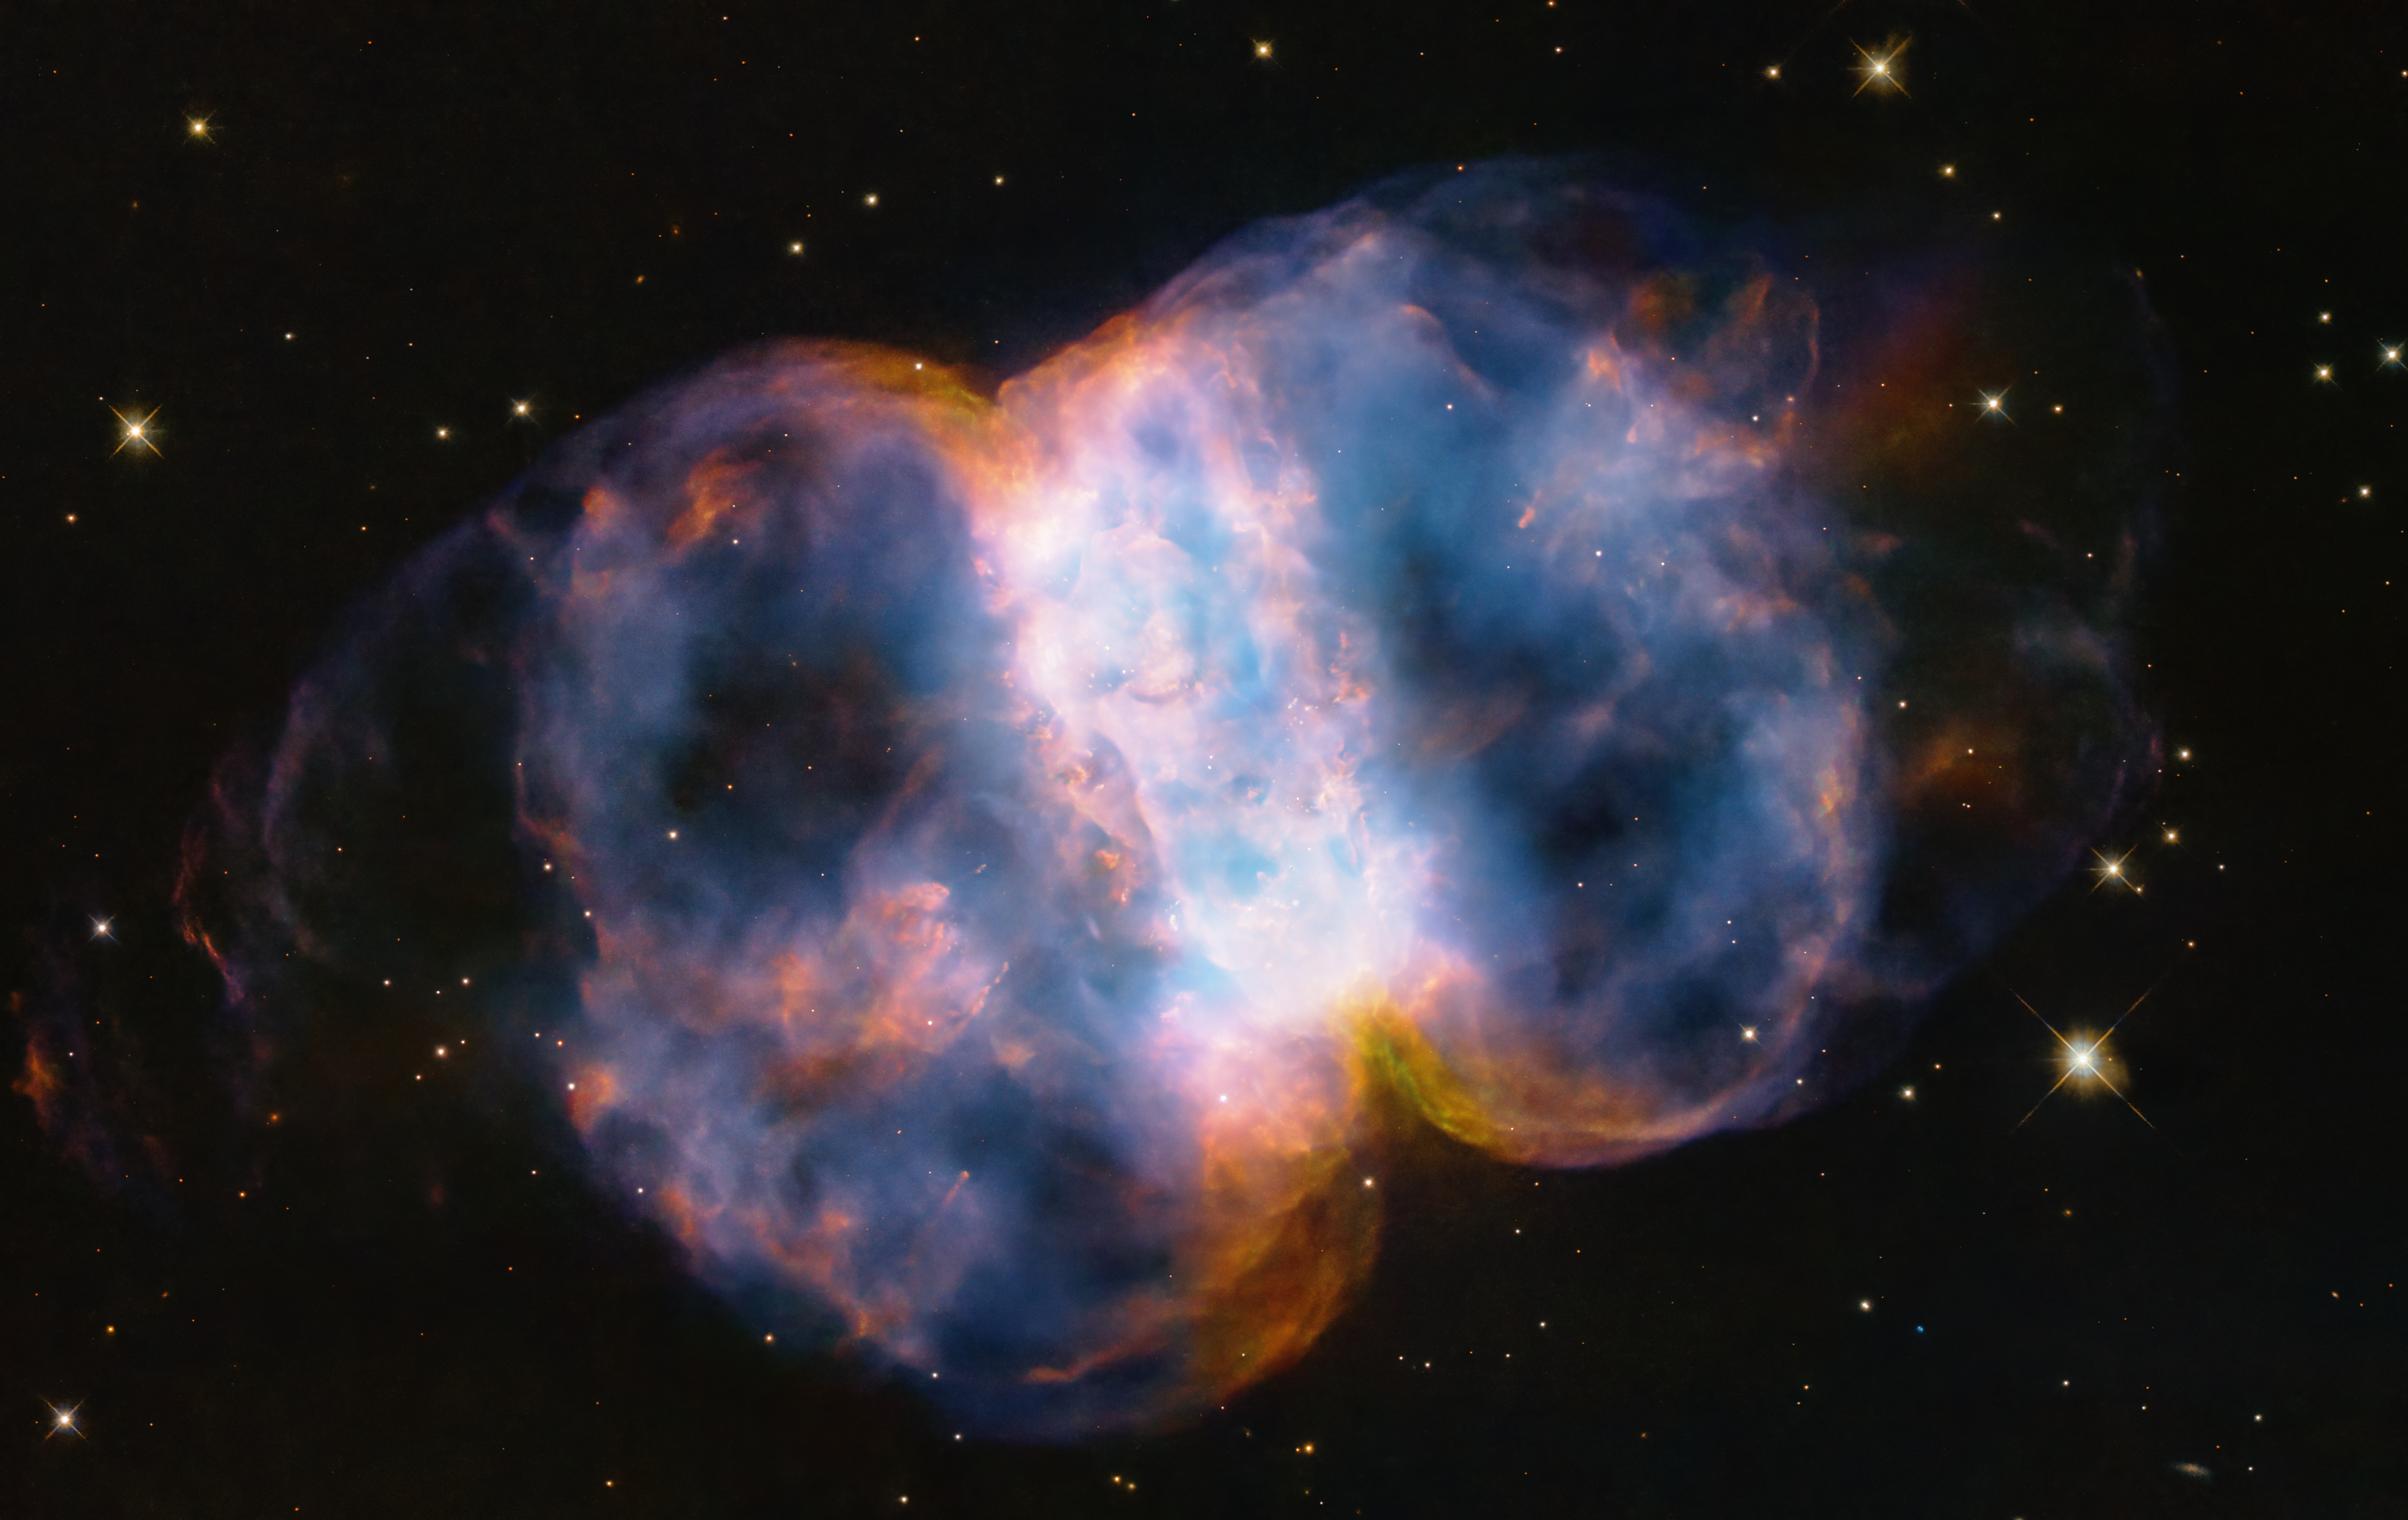 Hubble Spots the Little Dumbbell Nebula